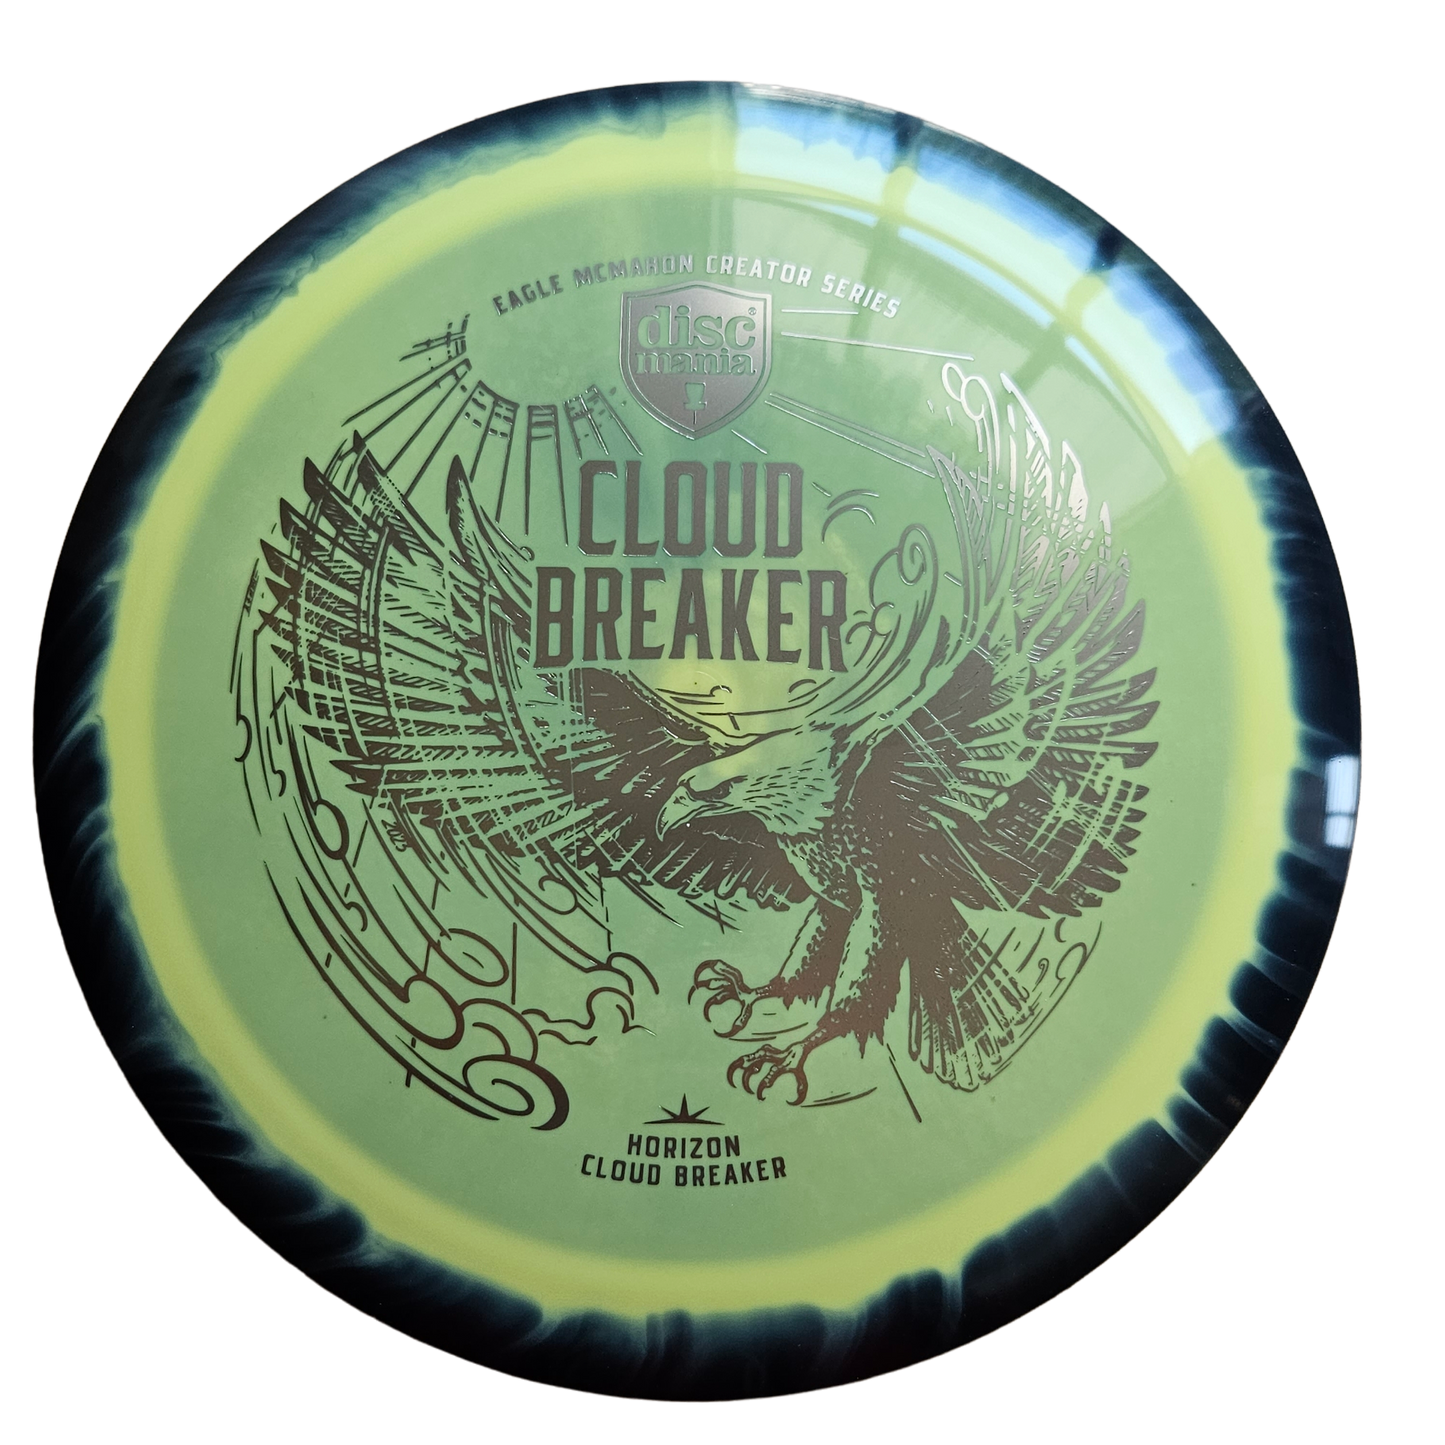 Eagle McMahon Creator Series Horizon Cloud Breaker